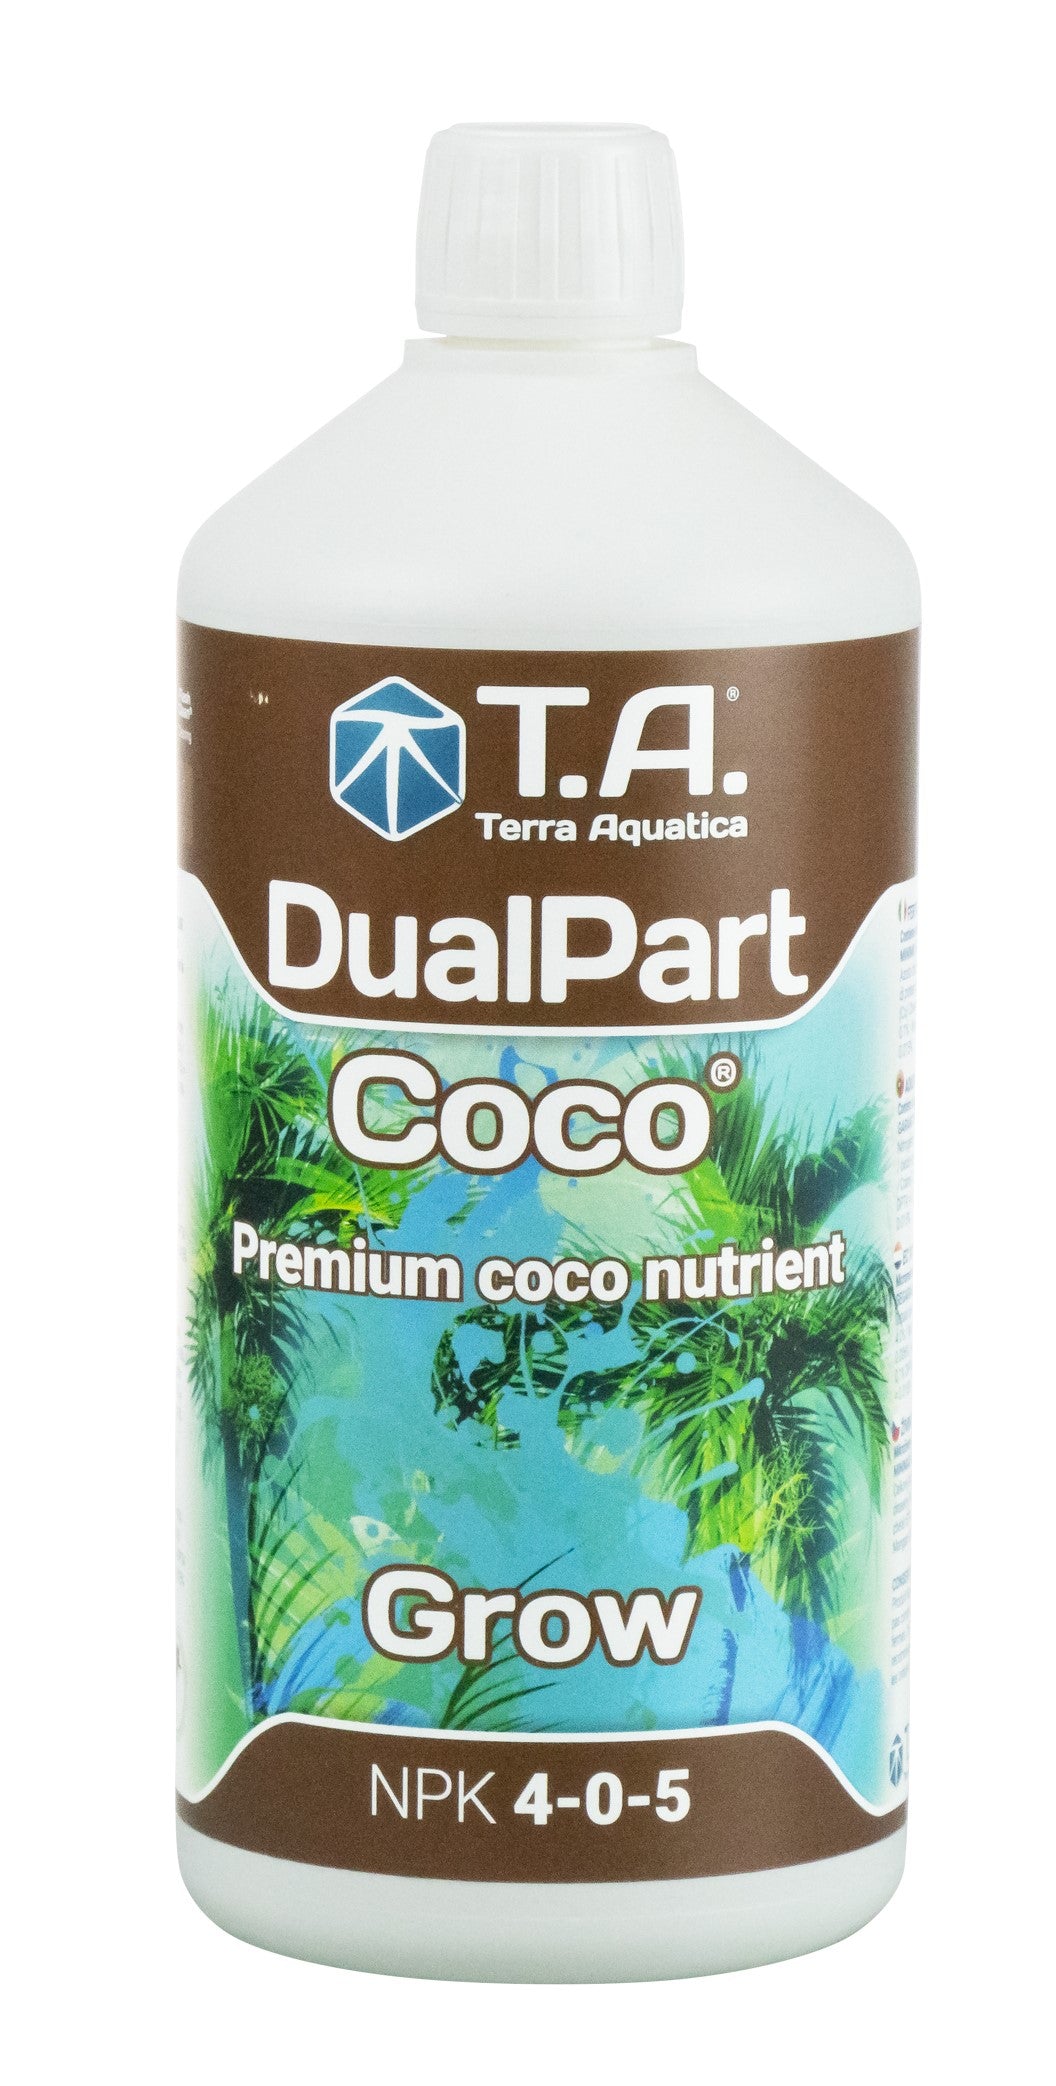 DualPart Coco - მინერალური სასუქი